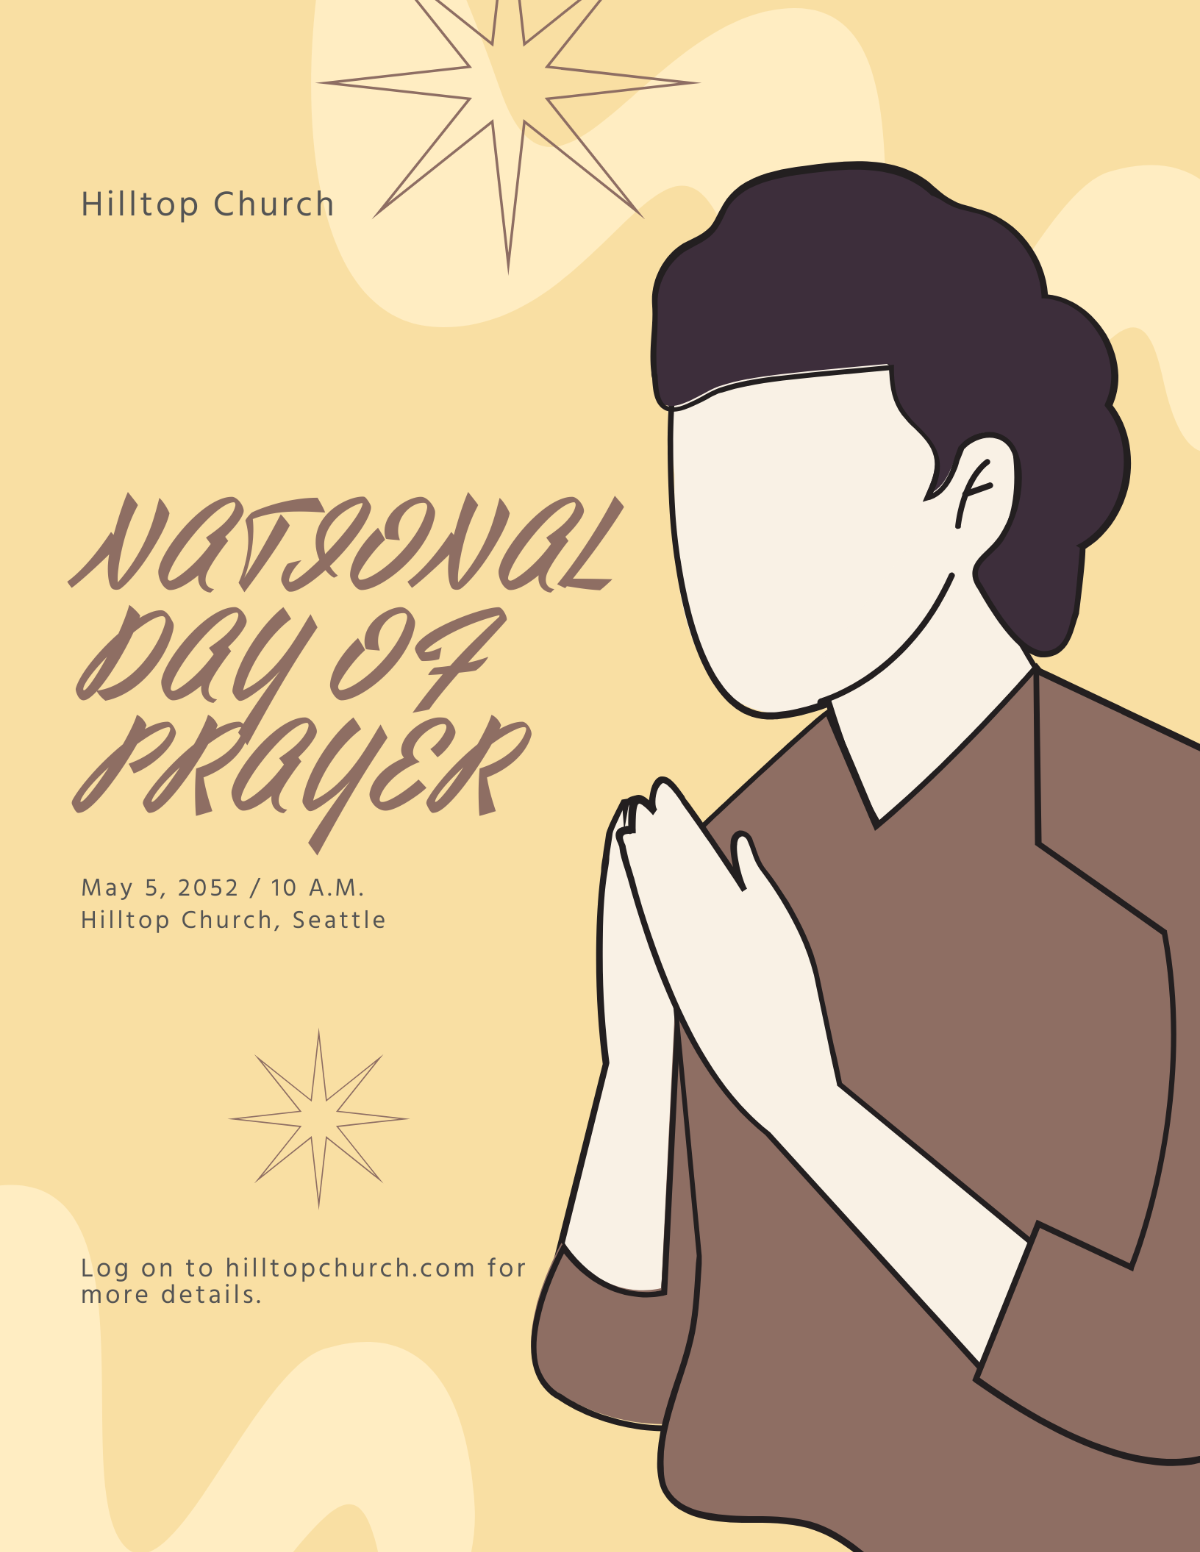 National Day Of Prayer Church Flyer